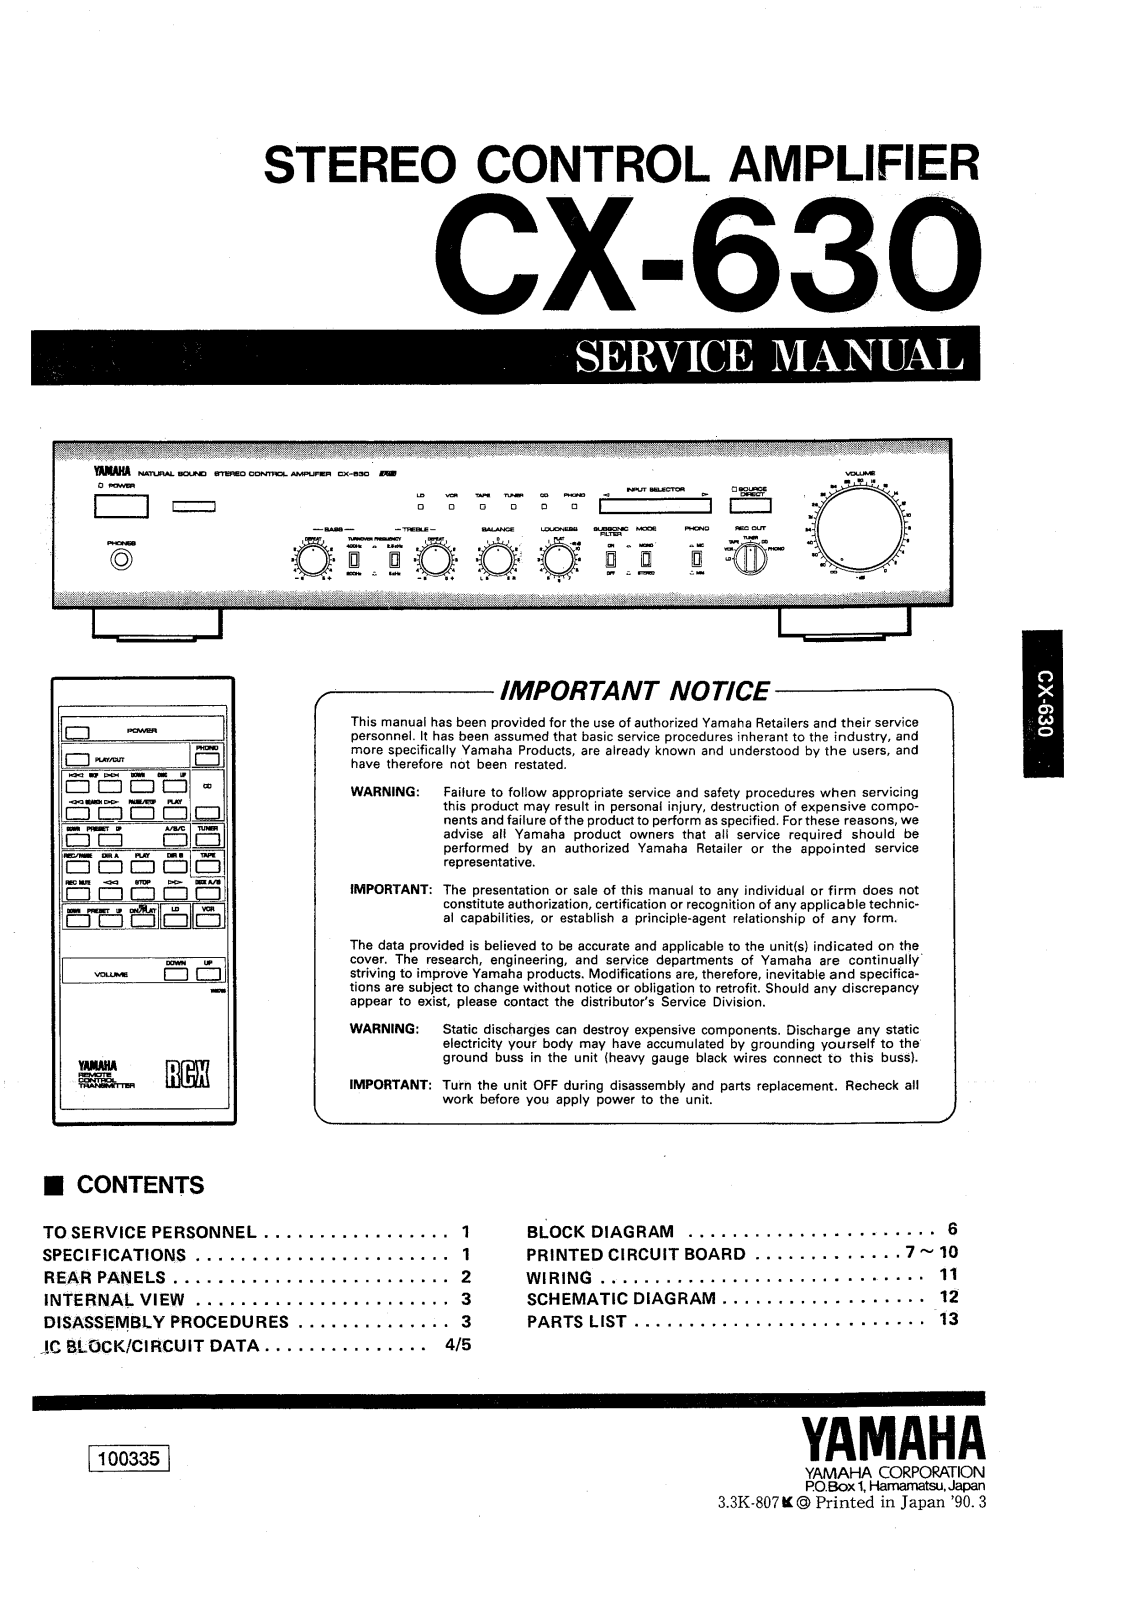 Yamaha CX-630 Service Manual